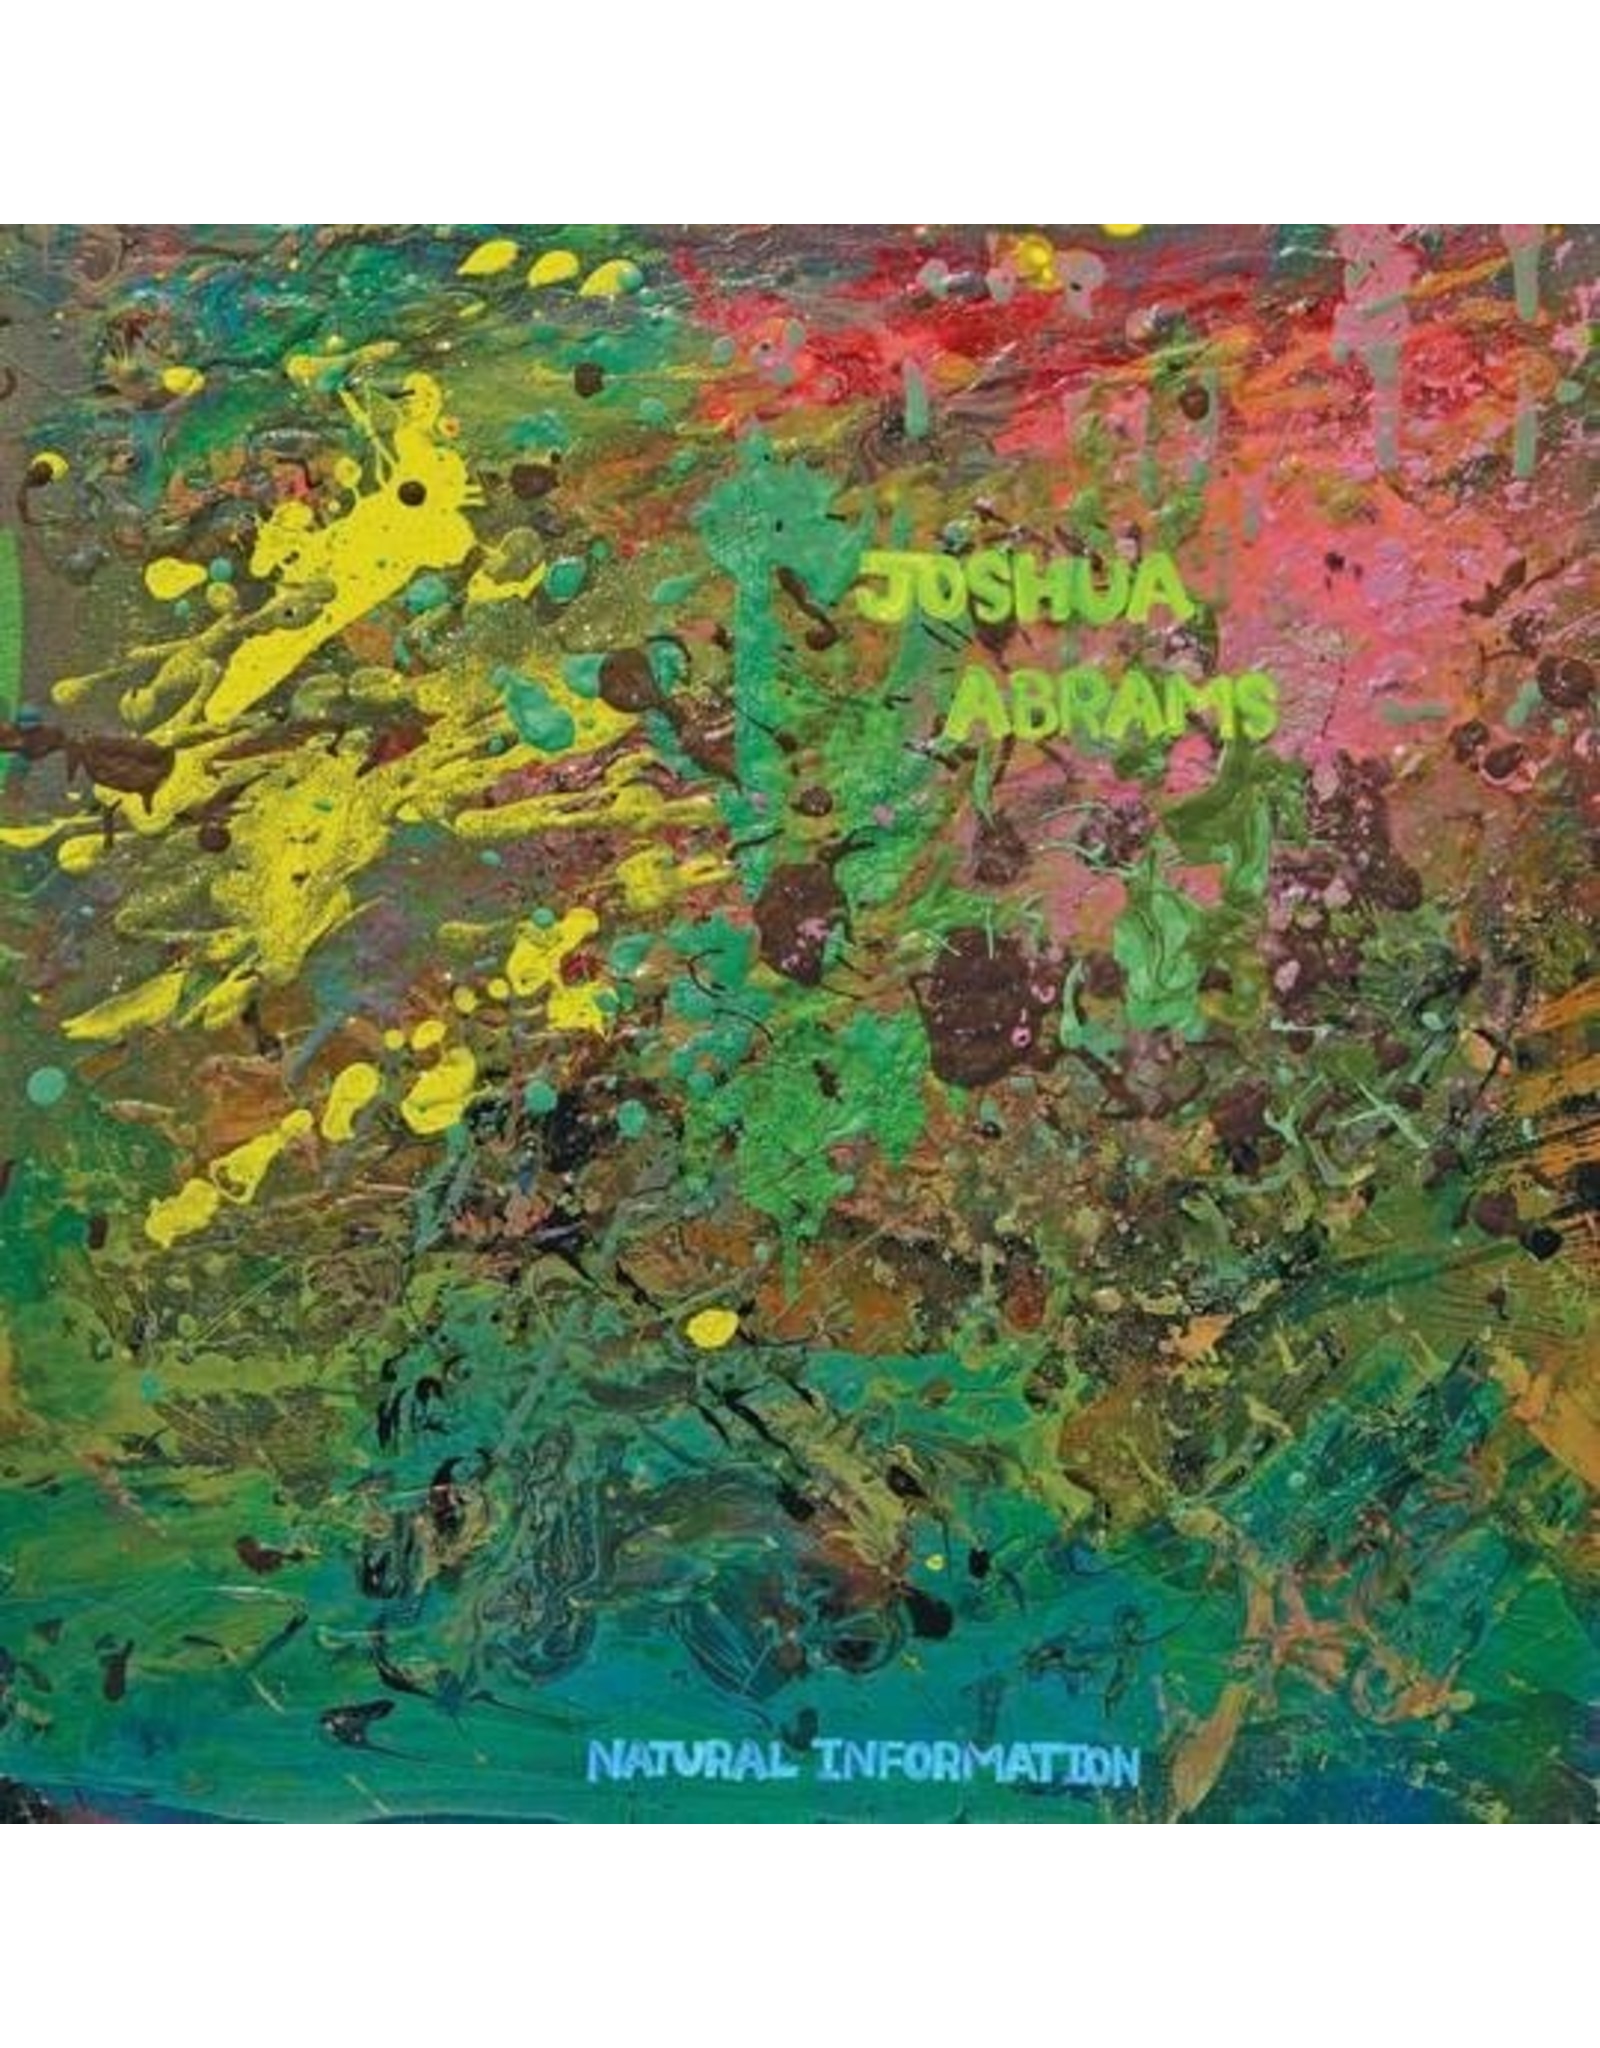 New Vinyl Joshua Abrams - Natural Information LP